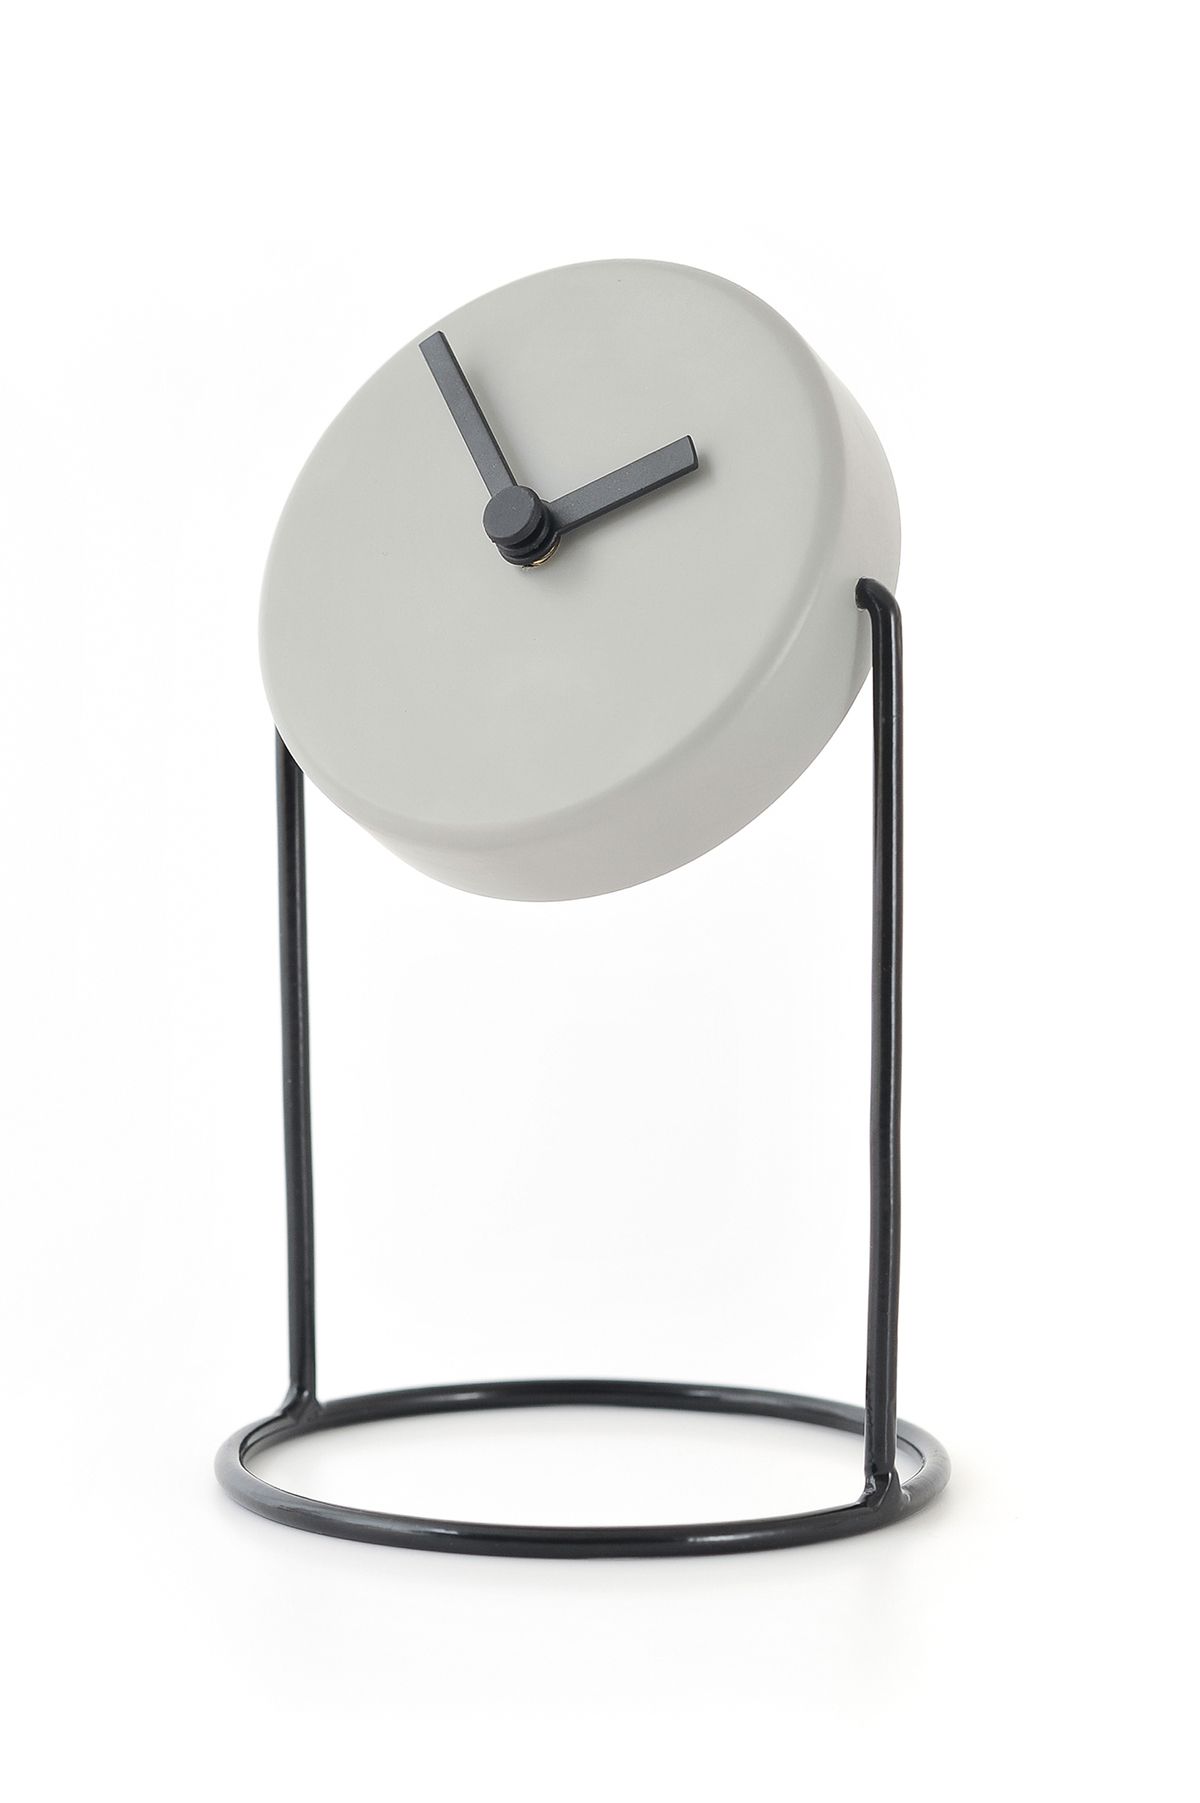 Timeless Elegance: Table Clocks for
Classic Decor